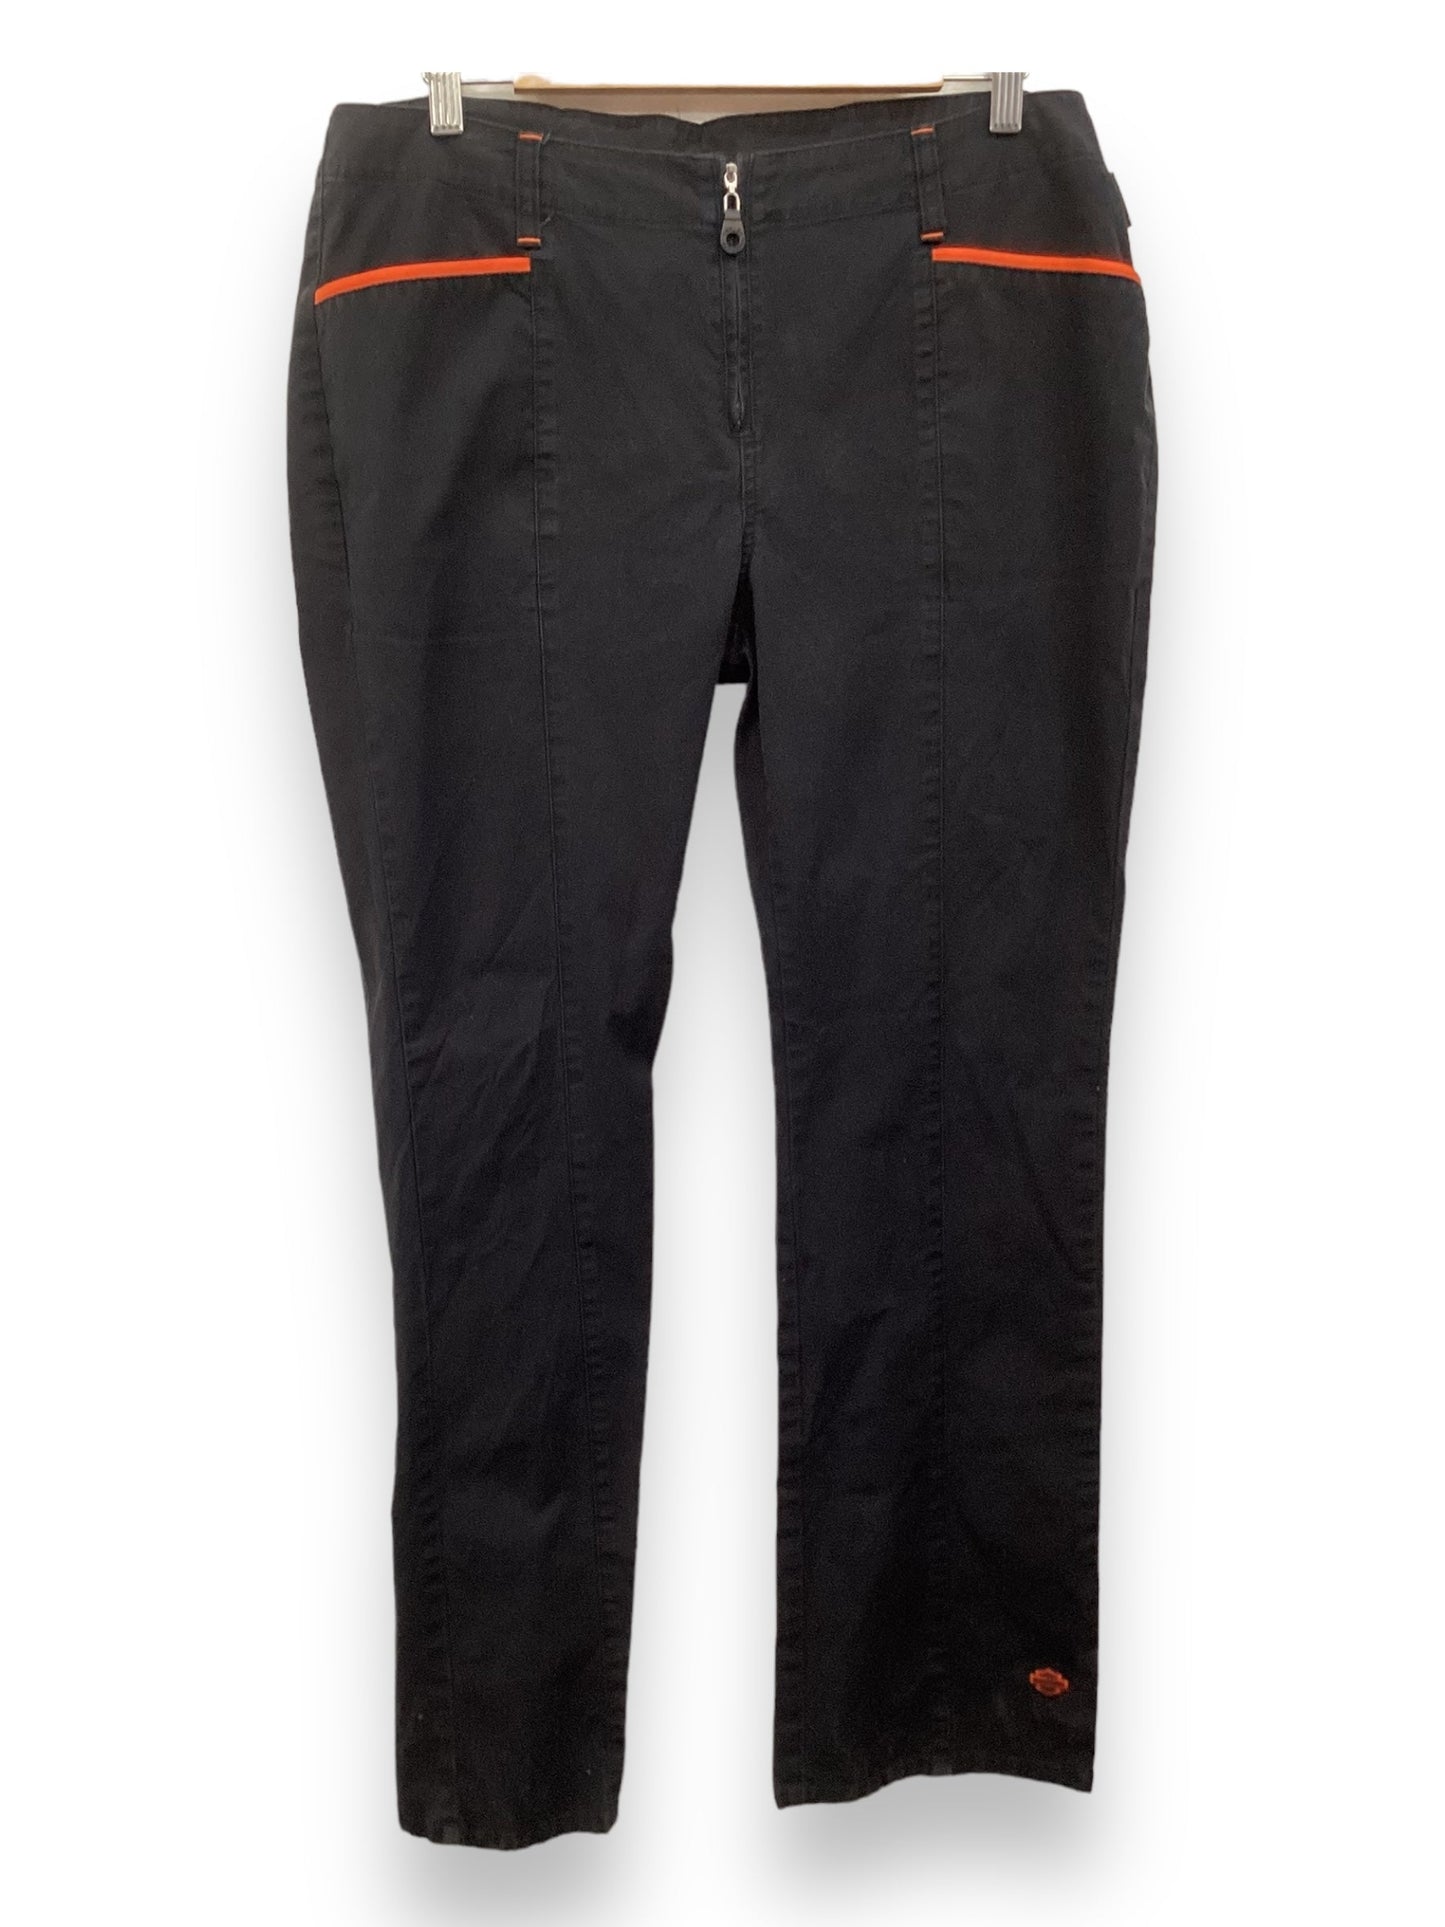 Pants Chinos & Khakis By Harley Davidson  Size: 12